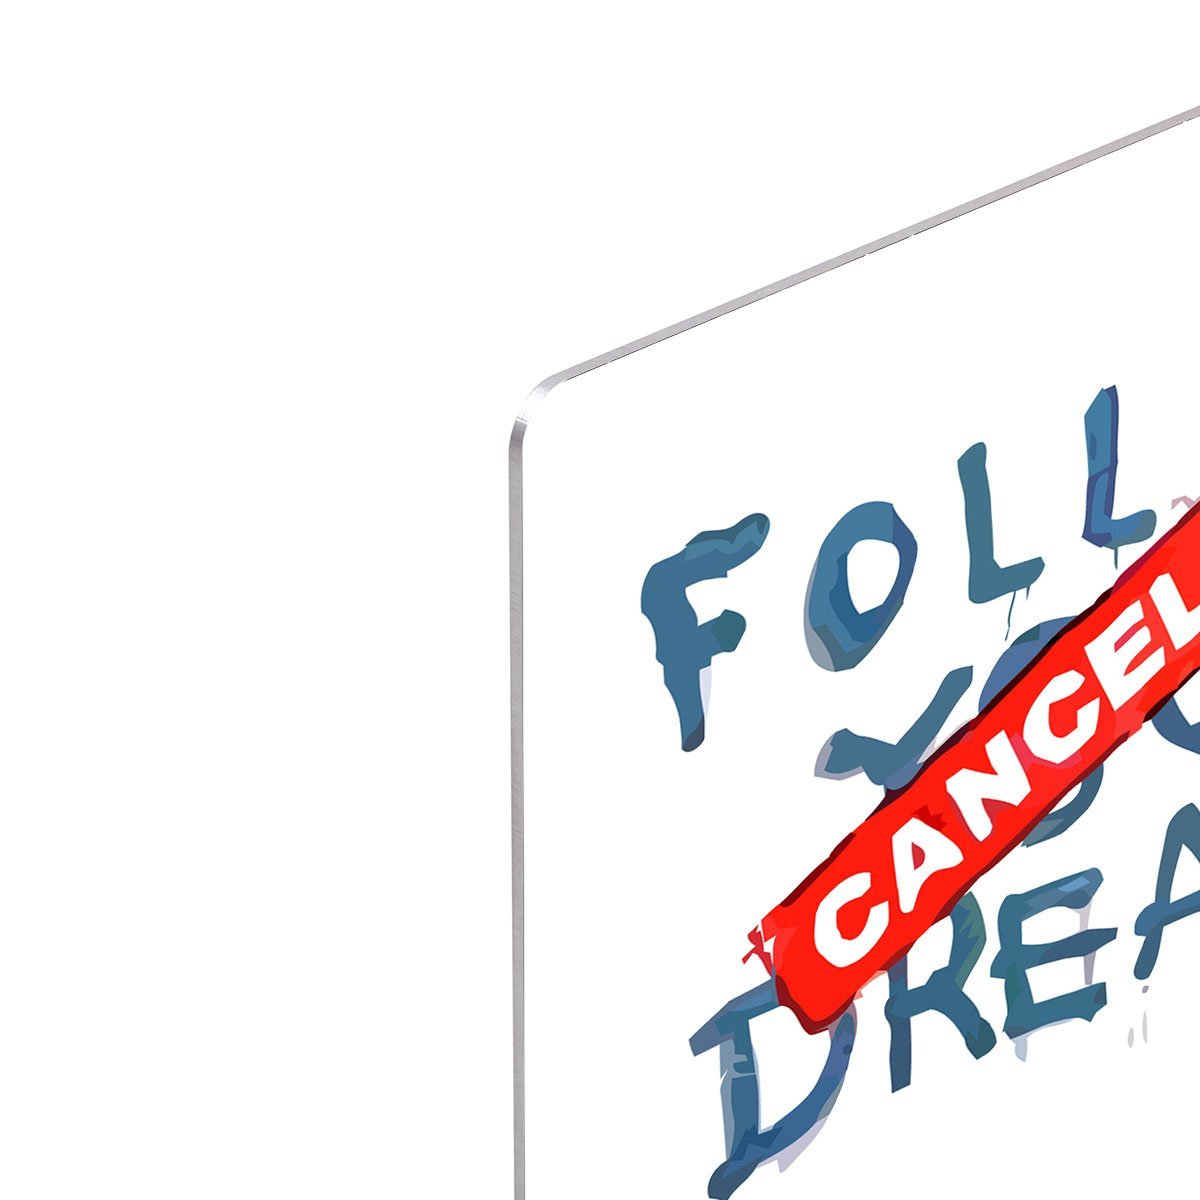 Banksy Follow Your Dreams - Cancelled HD Metal Print